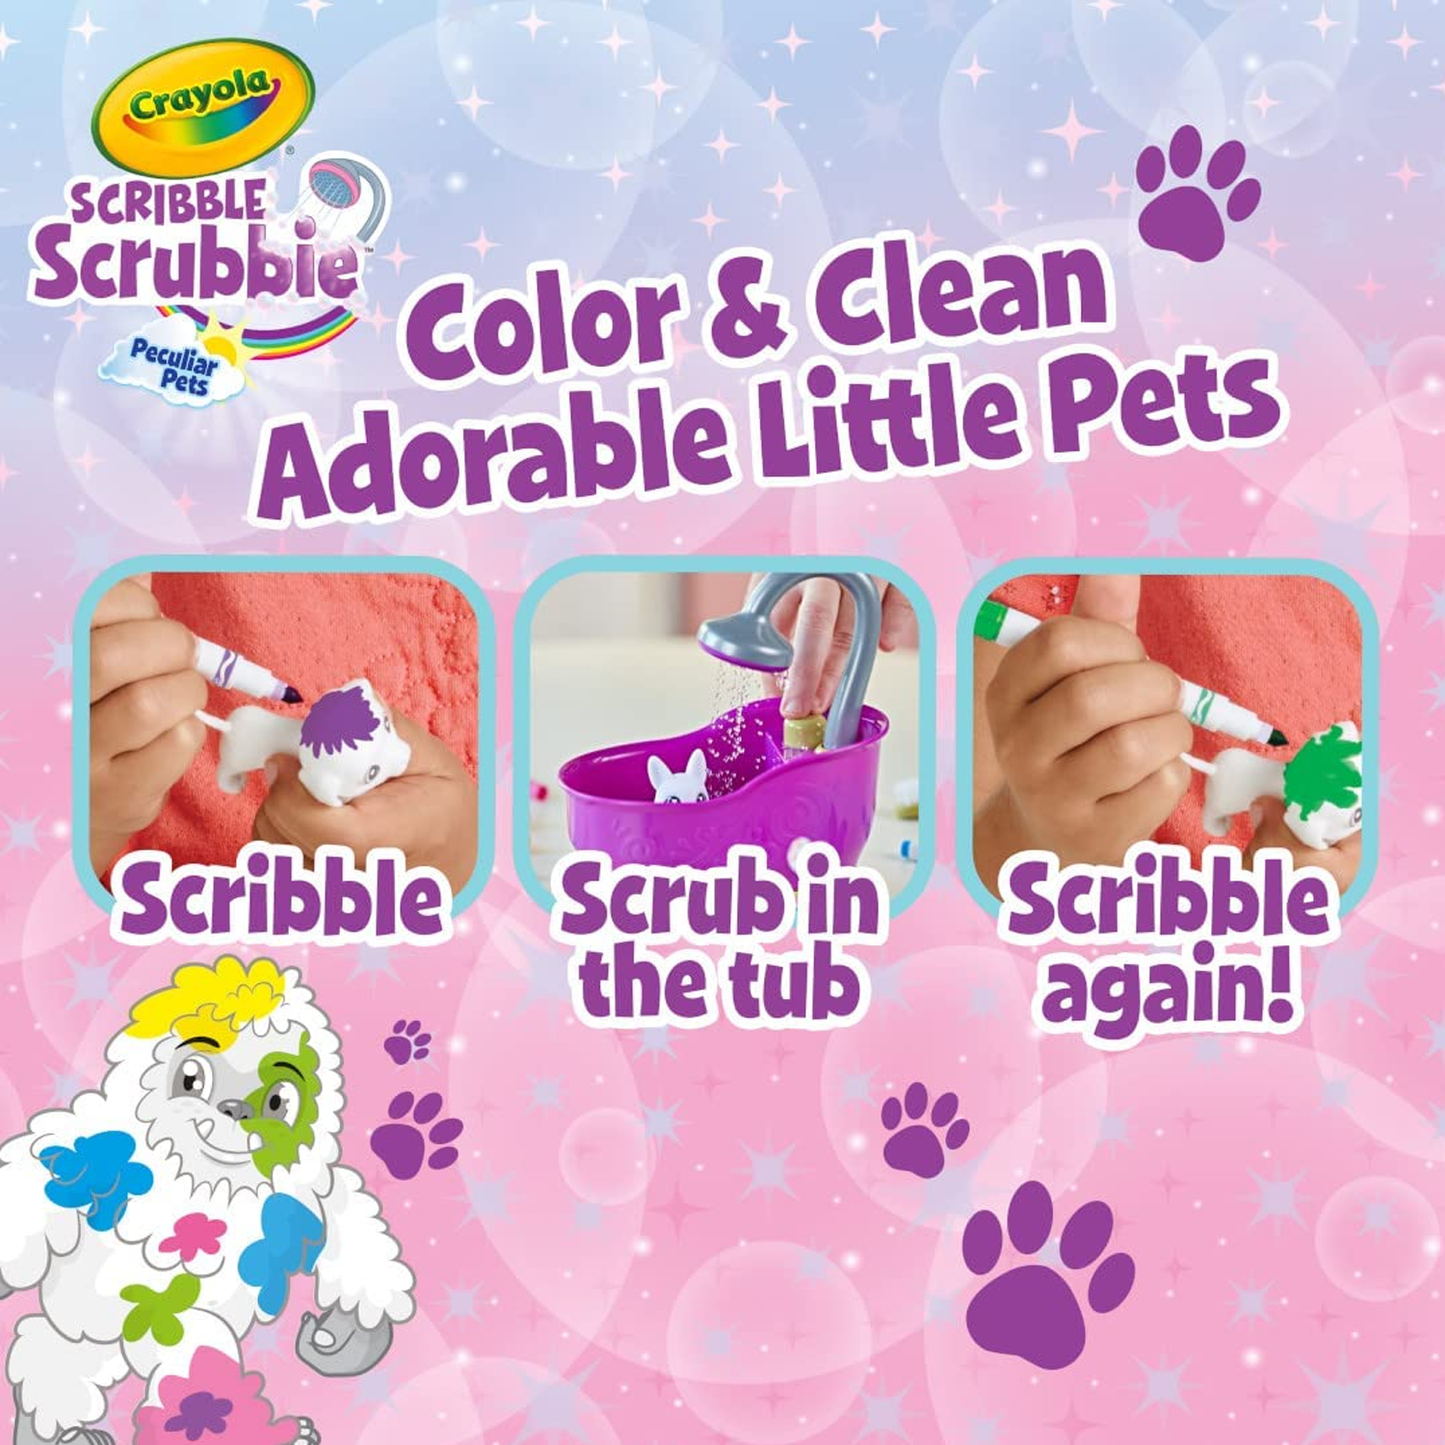 Crayola Scribble Scrubbie - Peculiar Pets Tub Playset